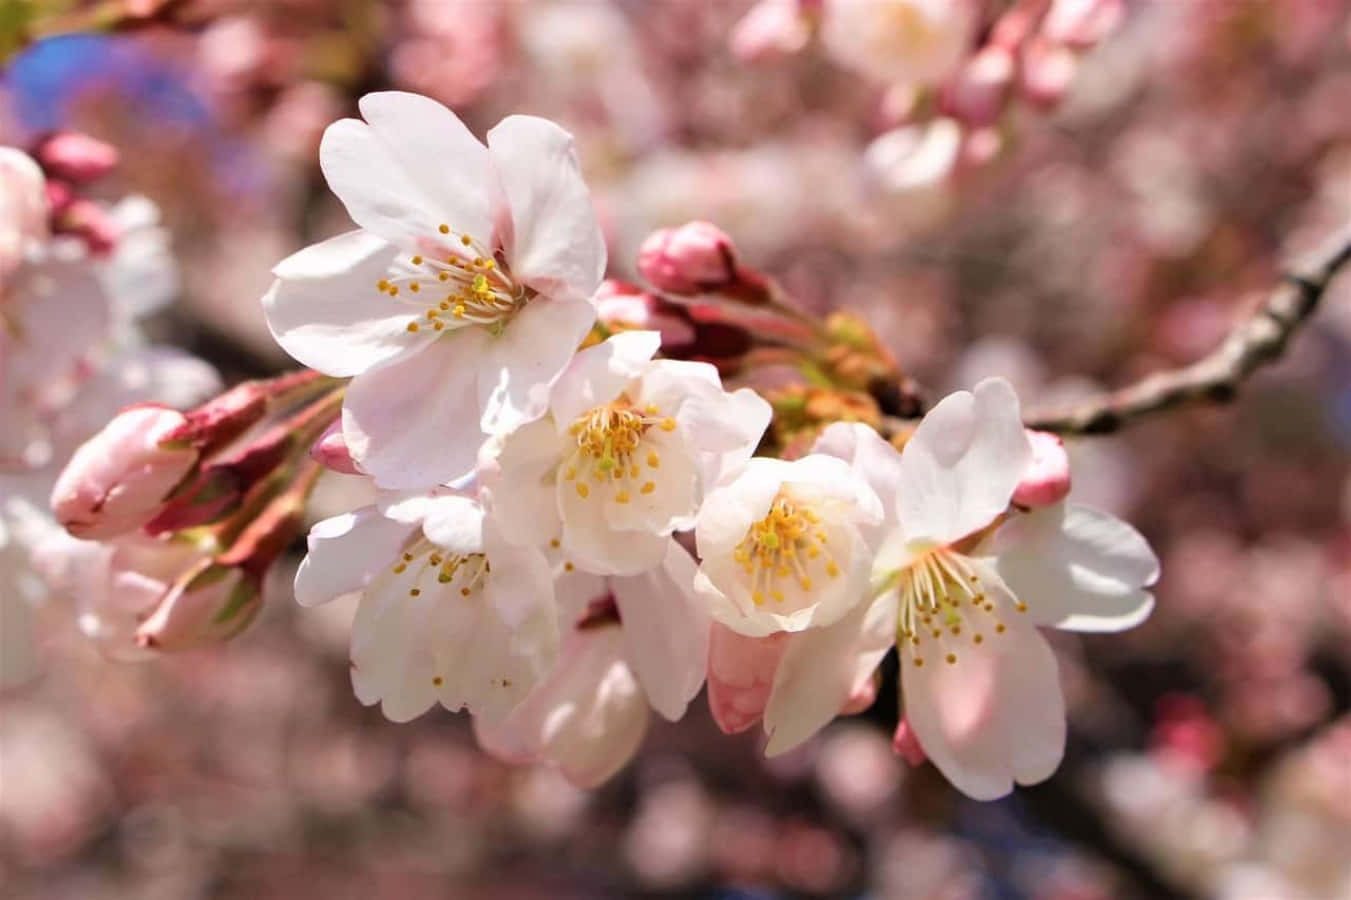 Enjoying the beautiful cherry blossom season in Japan